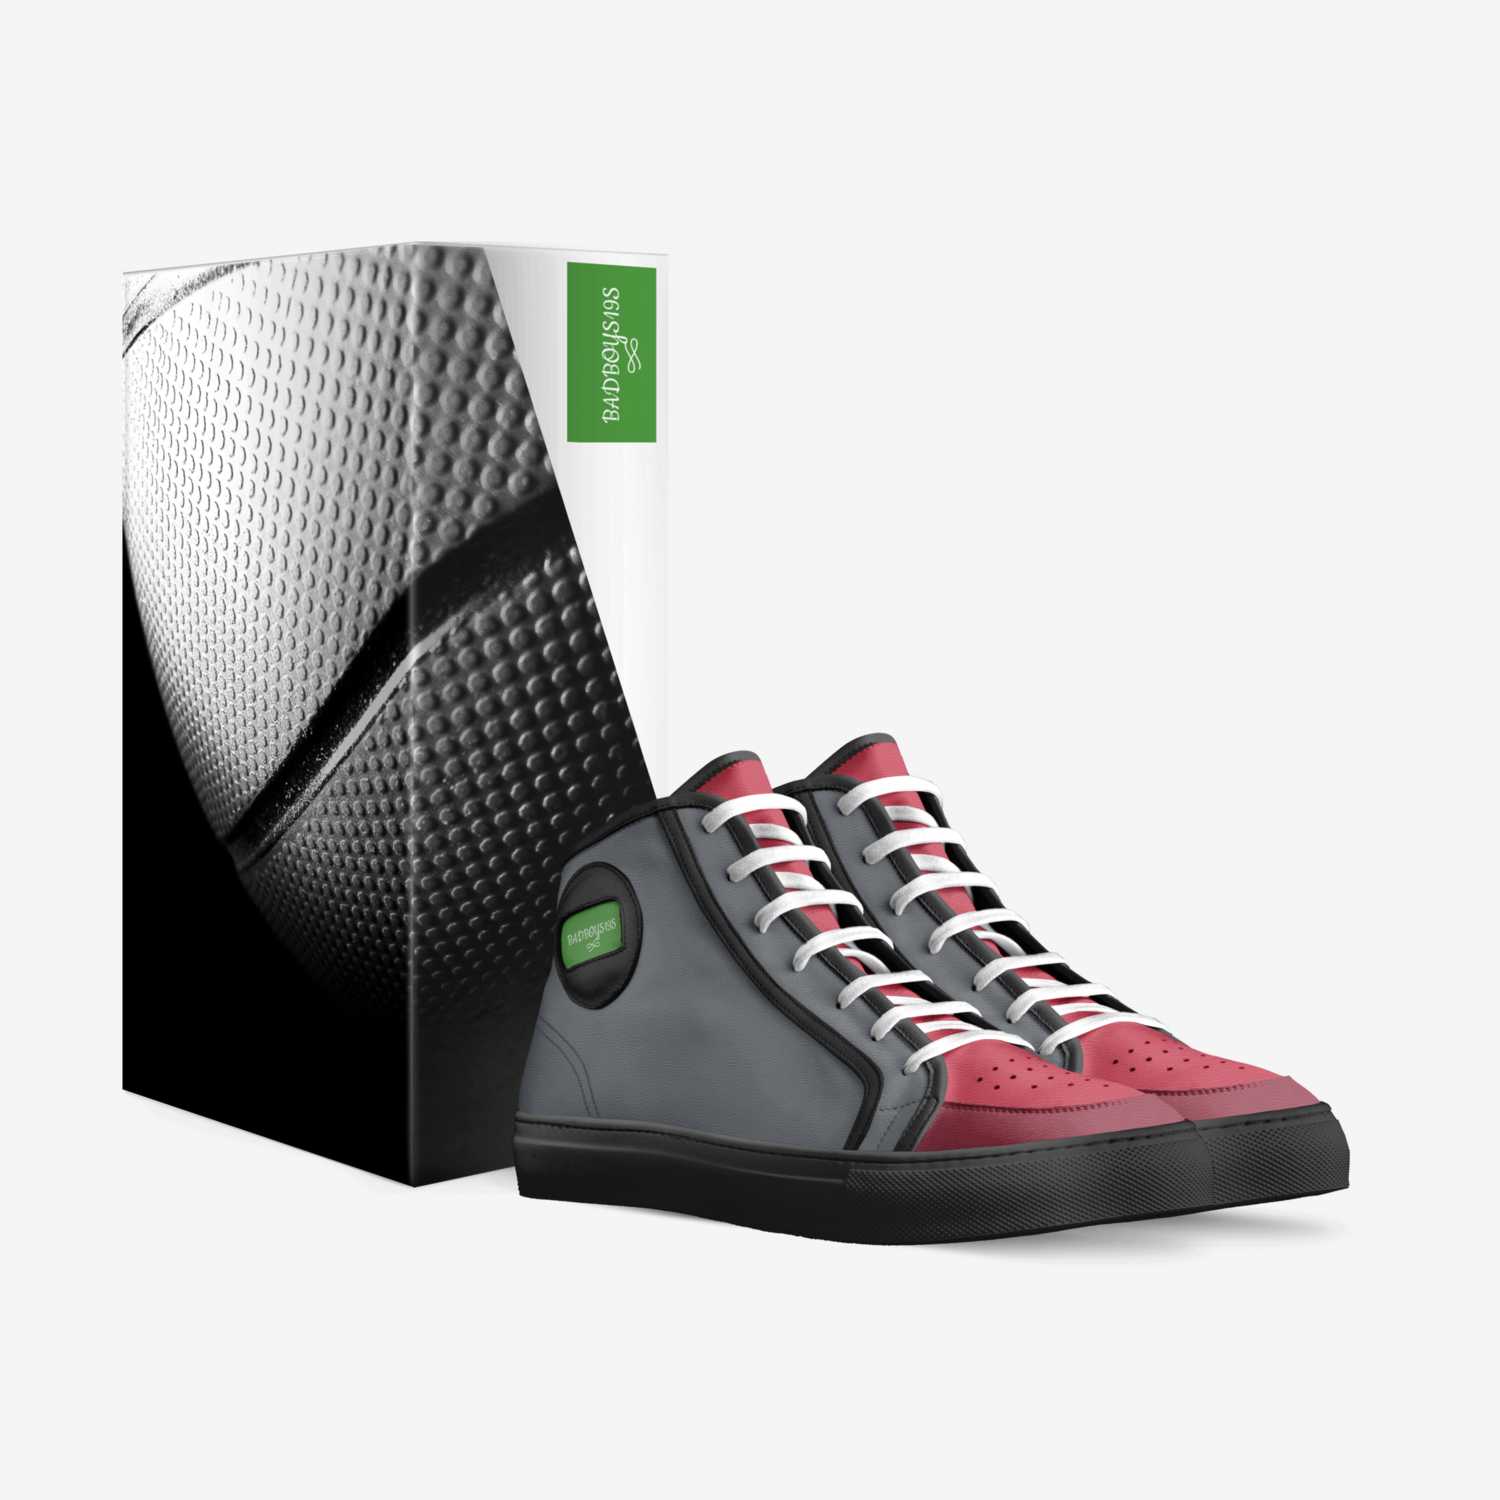 BADBOYS19S custom made in Italy shoes by Abuba | Box view